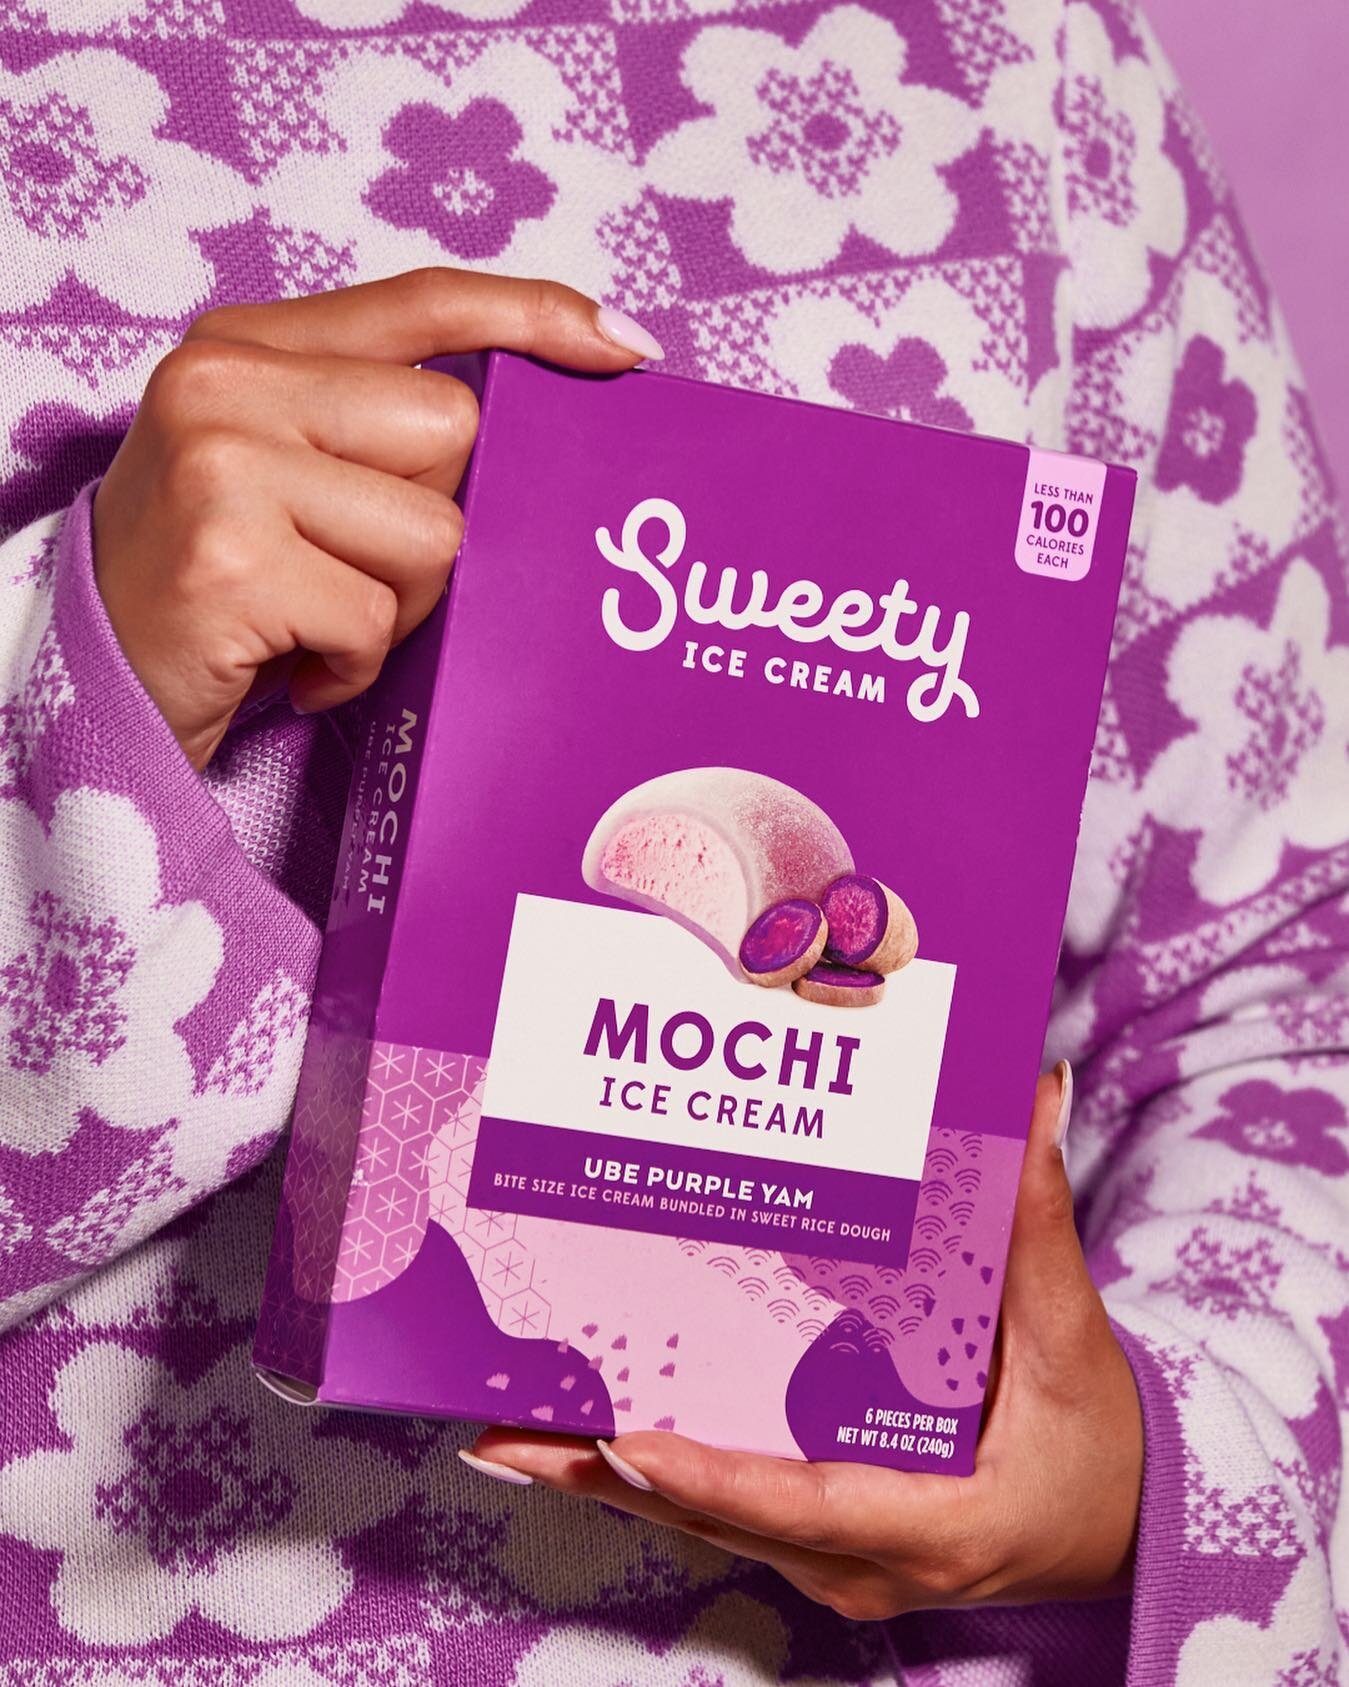 Sweety mochi ice cream is the best mochi ice cream - but don&rsquo;t let us tell you. UBE the judge🍠 #TheSweetyLife 

@safeway, @walmart, @superkingmarkets, @vallarta.supermarkets, @nuggetmarkets, @jonsmarketplace @harmons
.
.
.
.
.
.
.
#mochicecrea